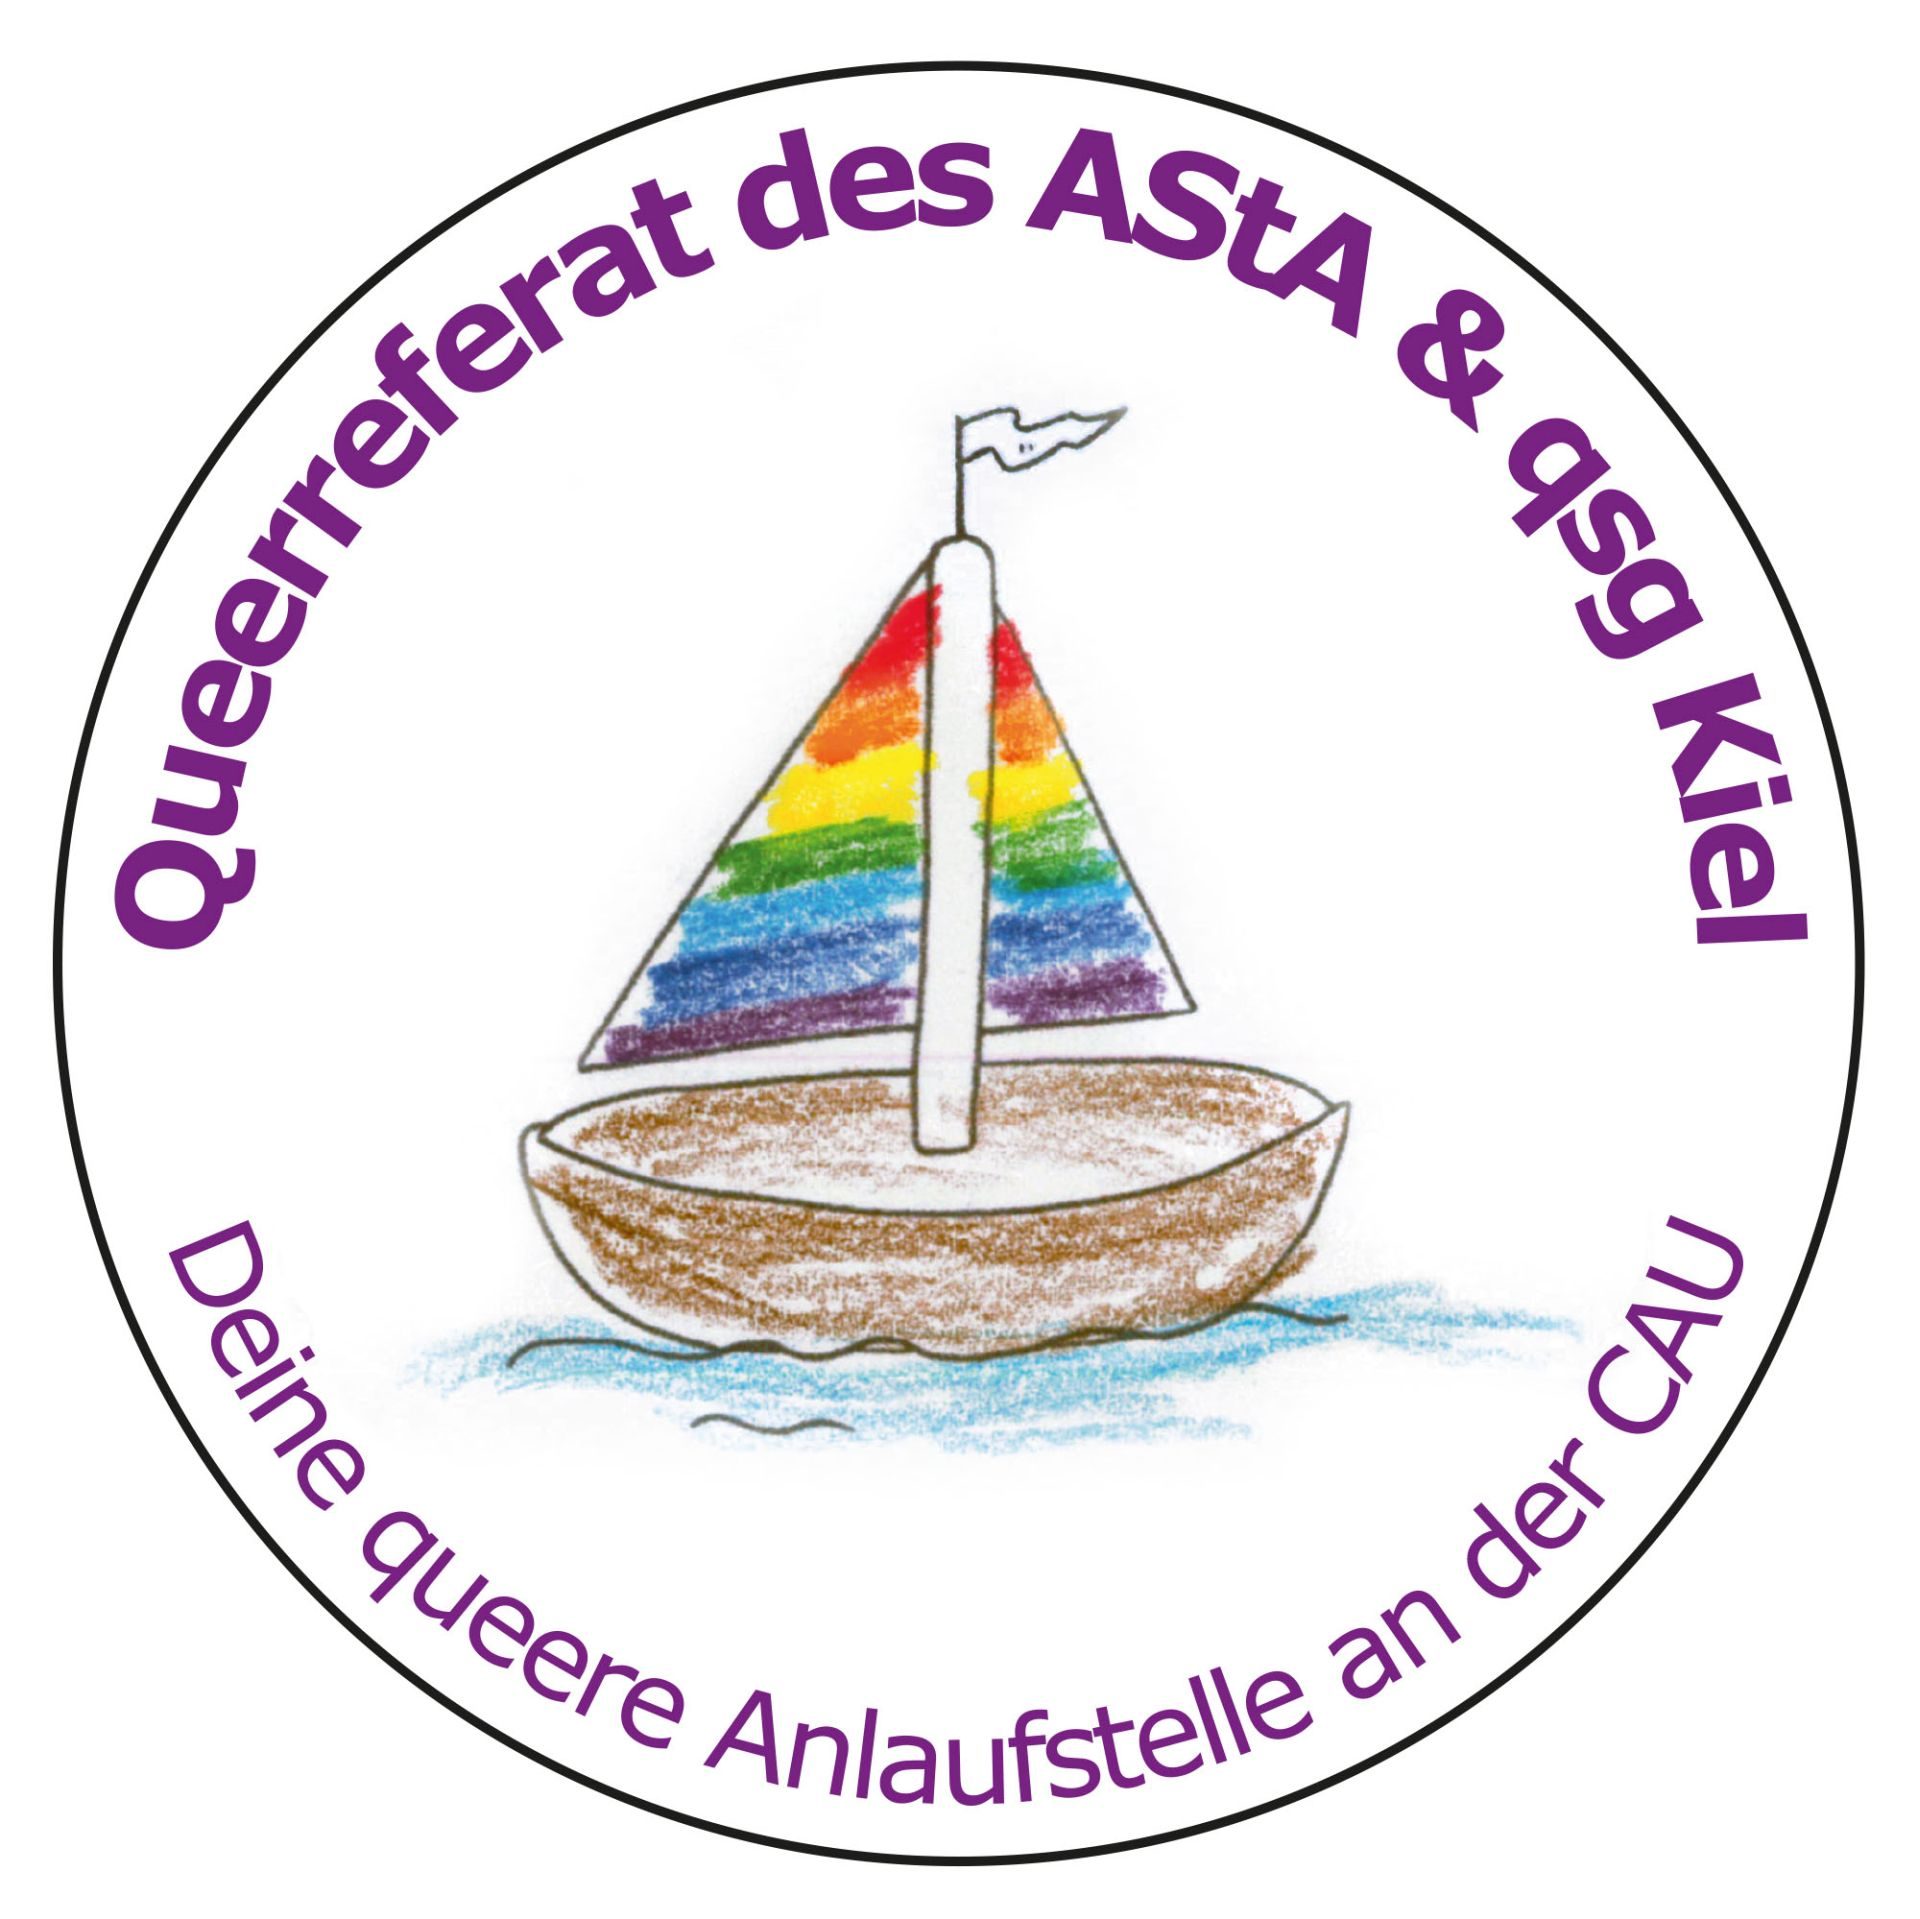 Queer@AStA auf dem CSD Kiel 